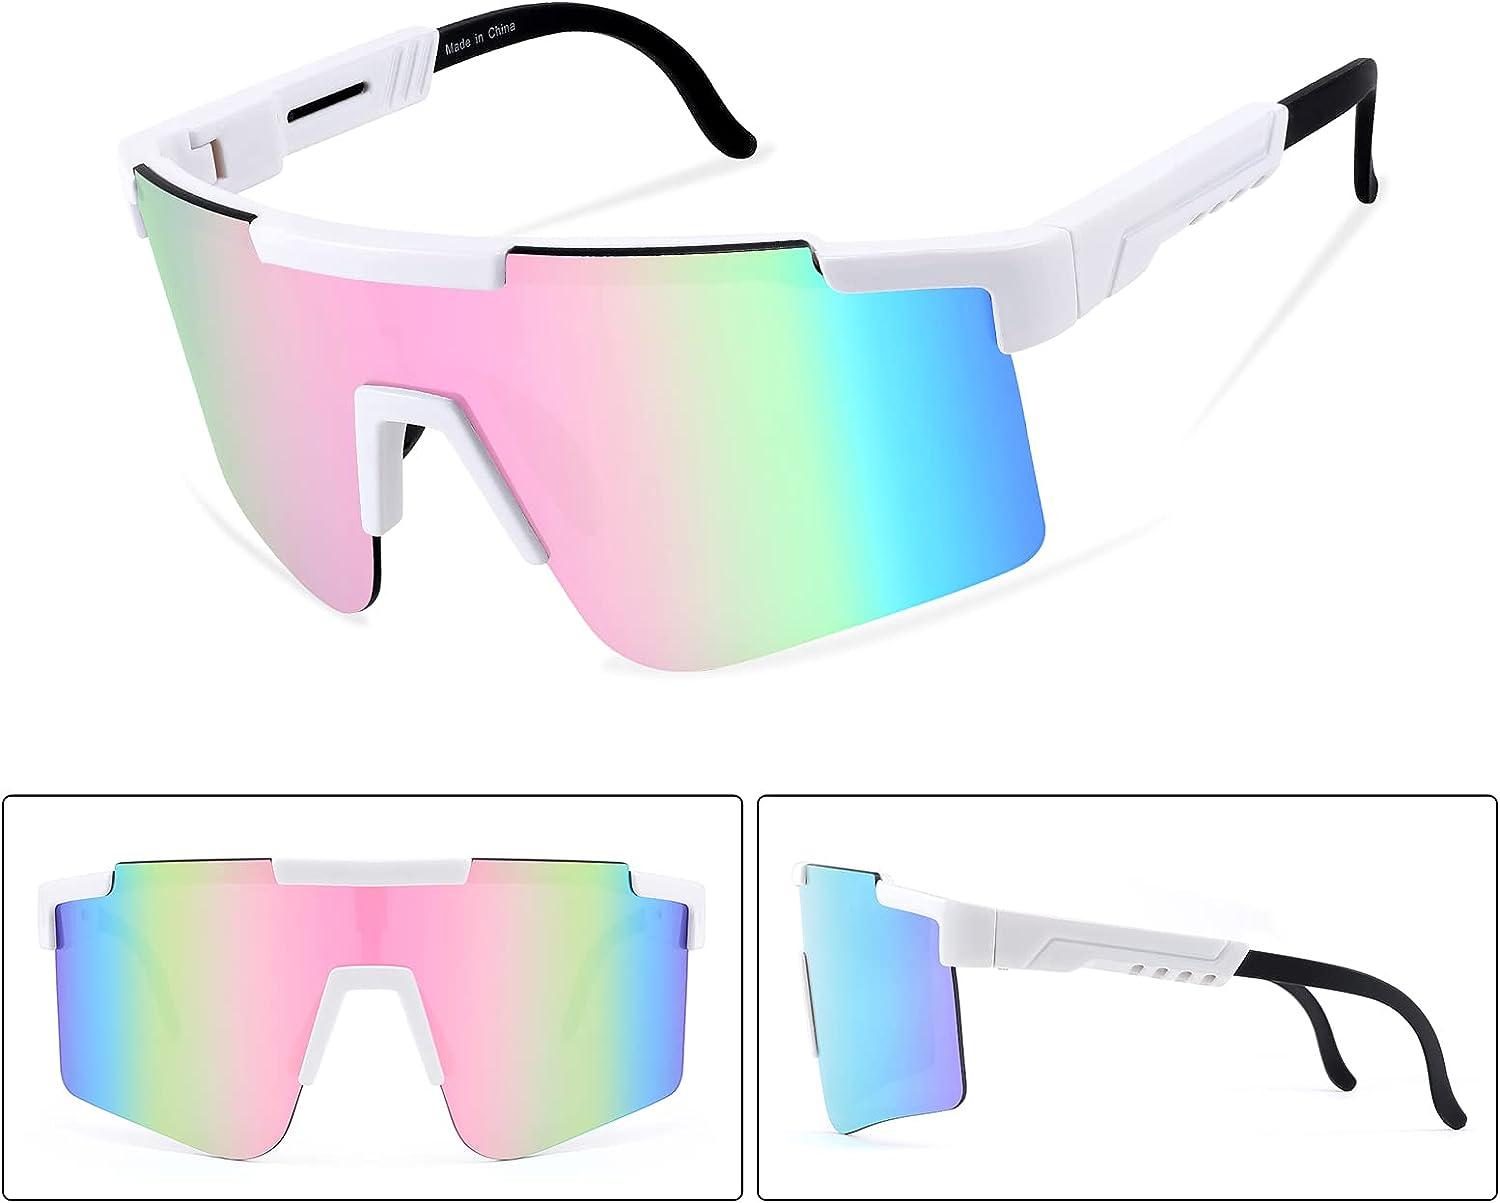  FEISEDY Polarized Cycling Sunglasses Women Men Outdoor Sports  Sunglasses Baseball Running Biking Fishing Sunglasses B2994 : Sports &  Outdoors